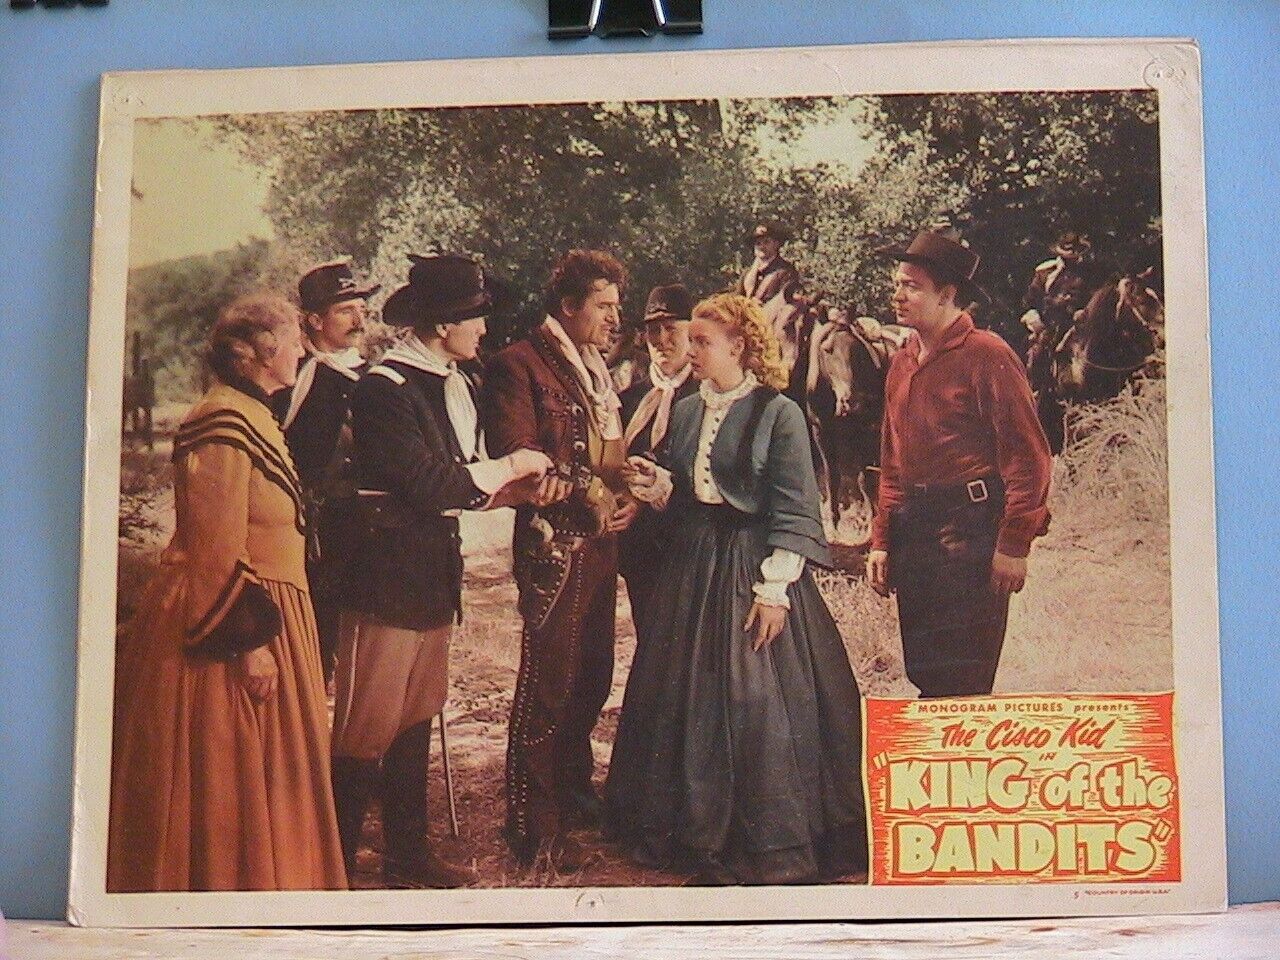 VINTAGE LOBBY CARDS-7-GILBERT ROLAND-CISCO KID-KING OF THE BANDITS-1947-TITLE C. Без бренда - фотография #7